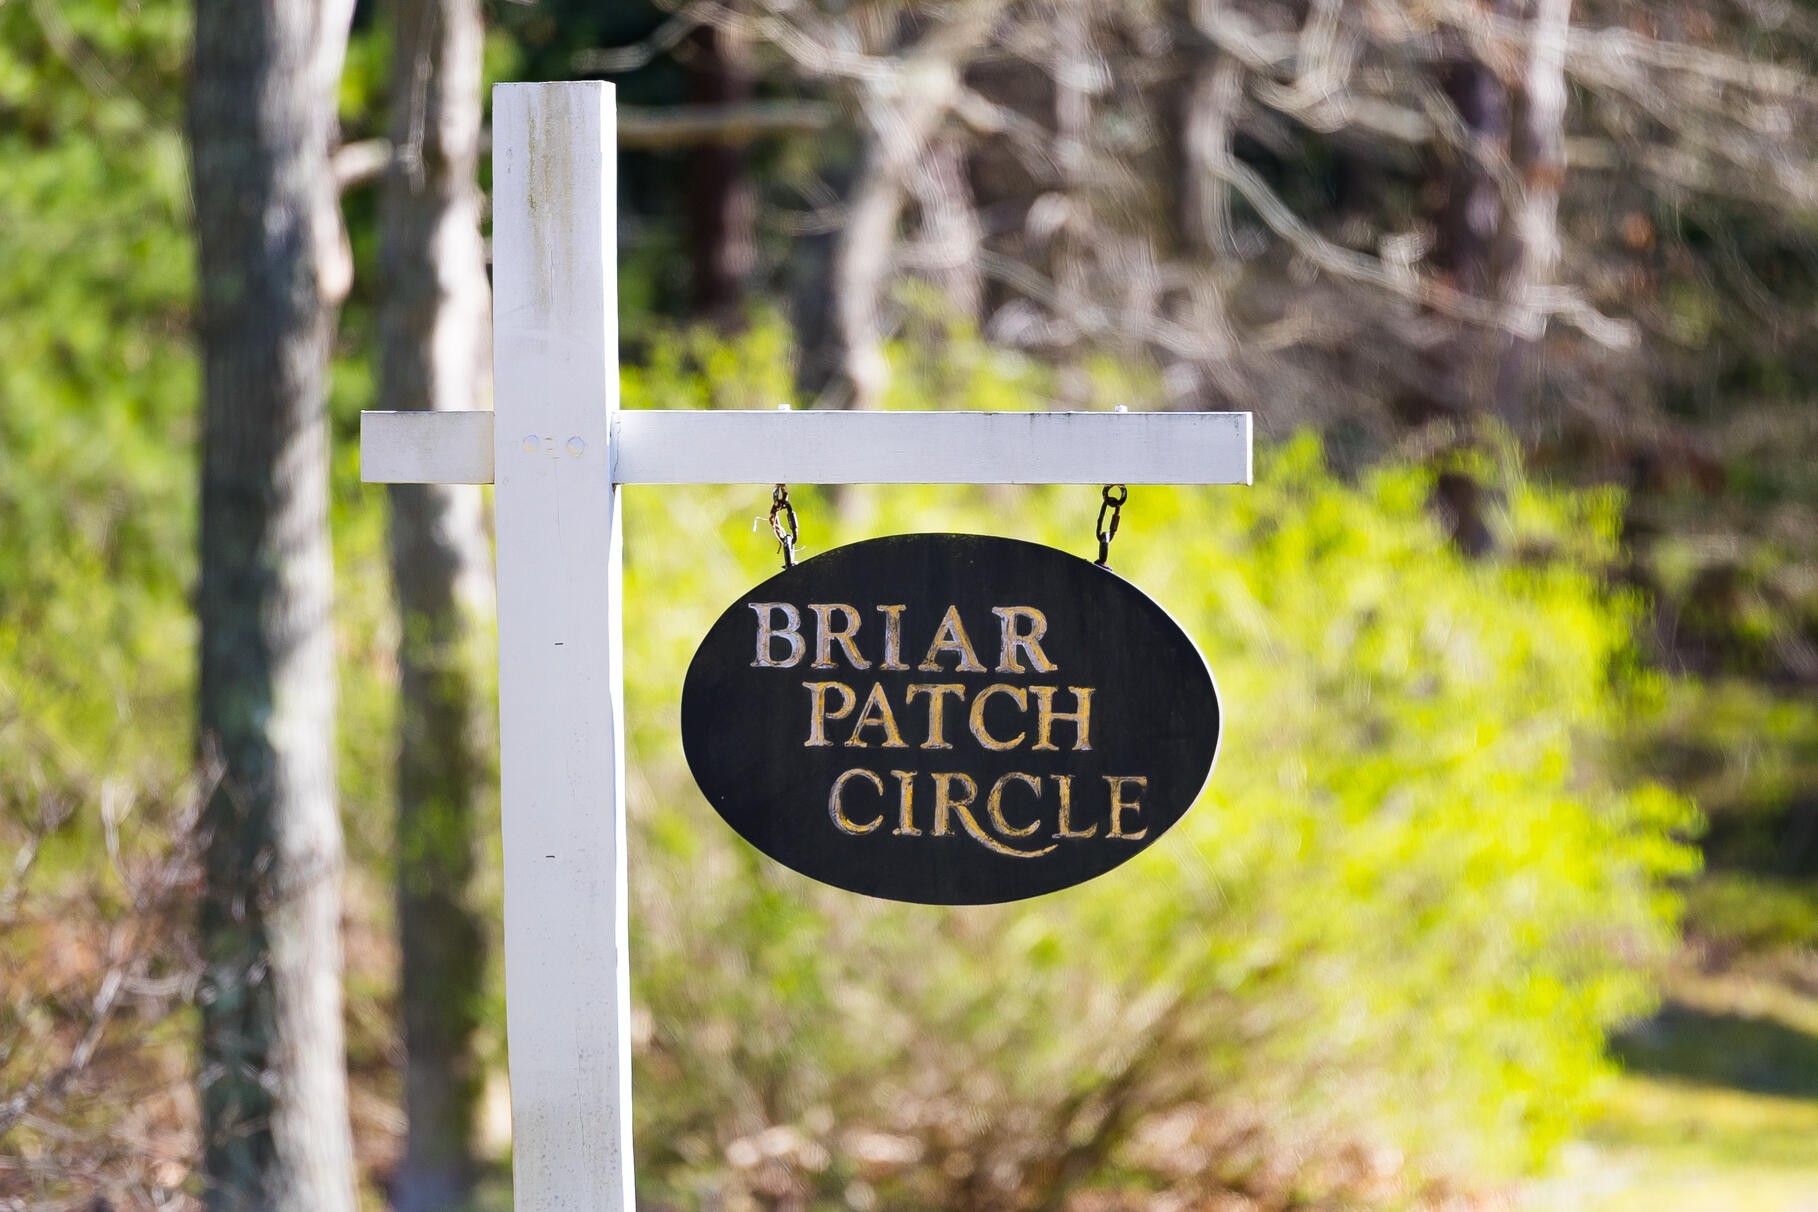 2. 2 Briar Patch Circle